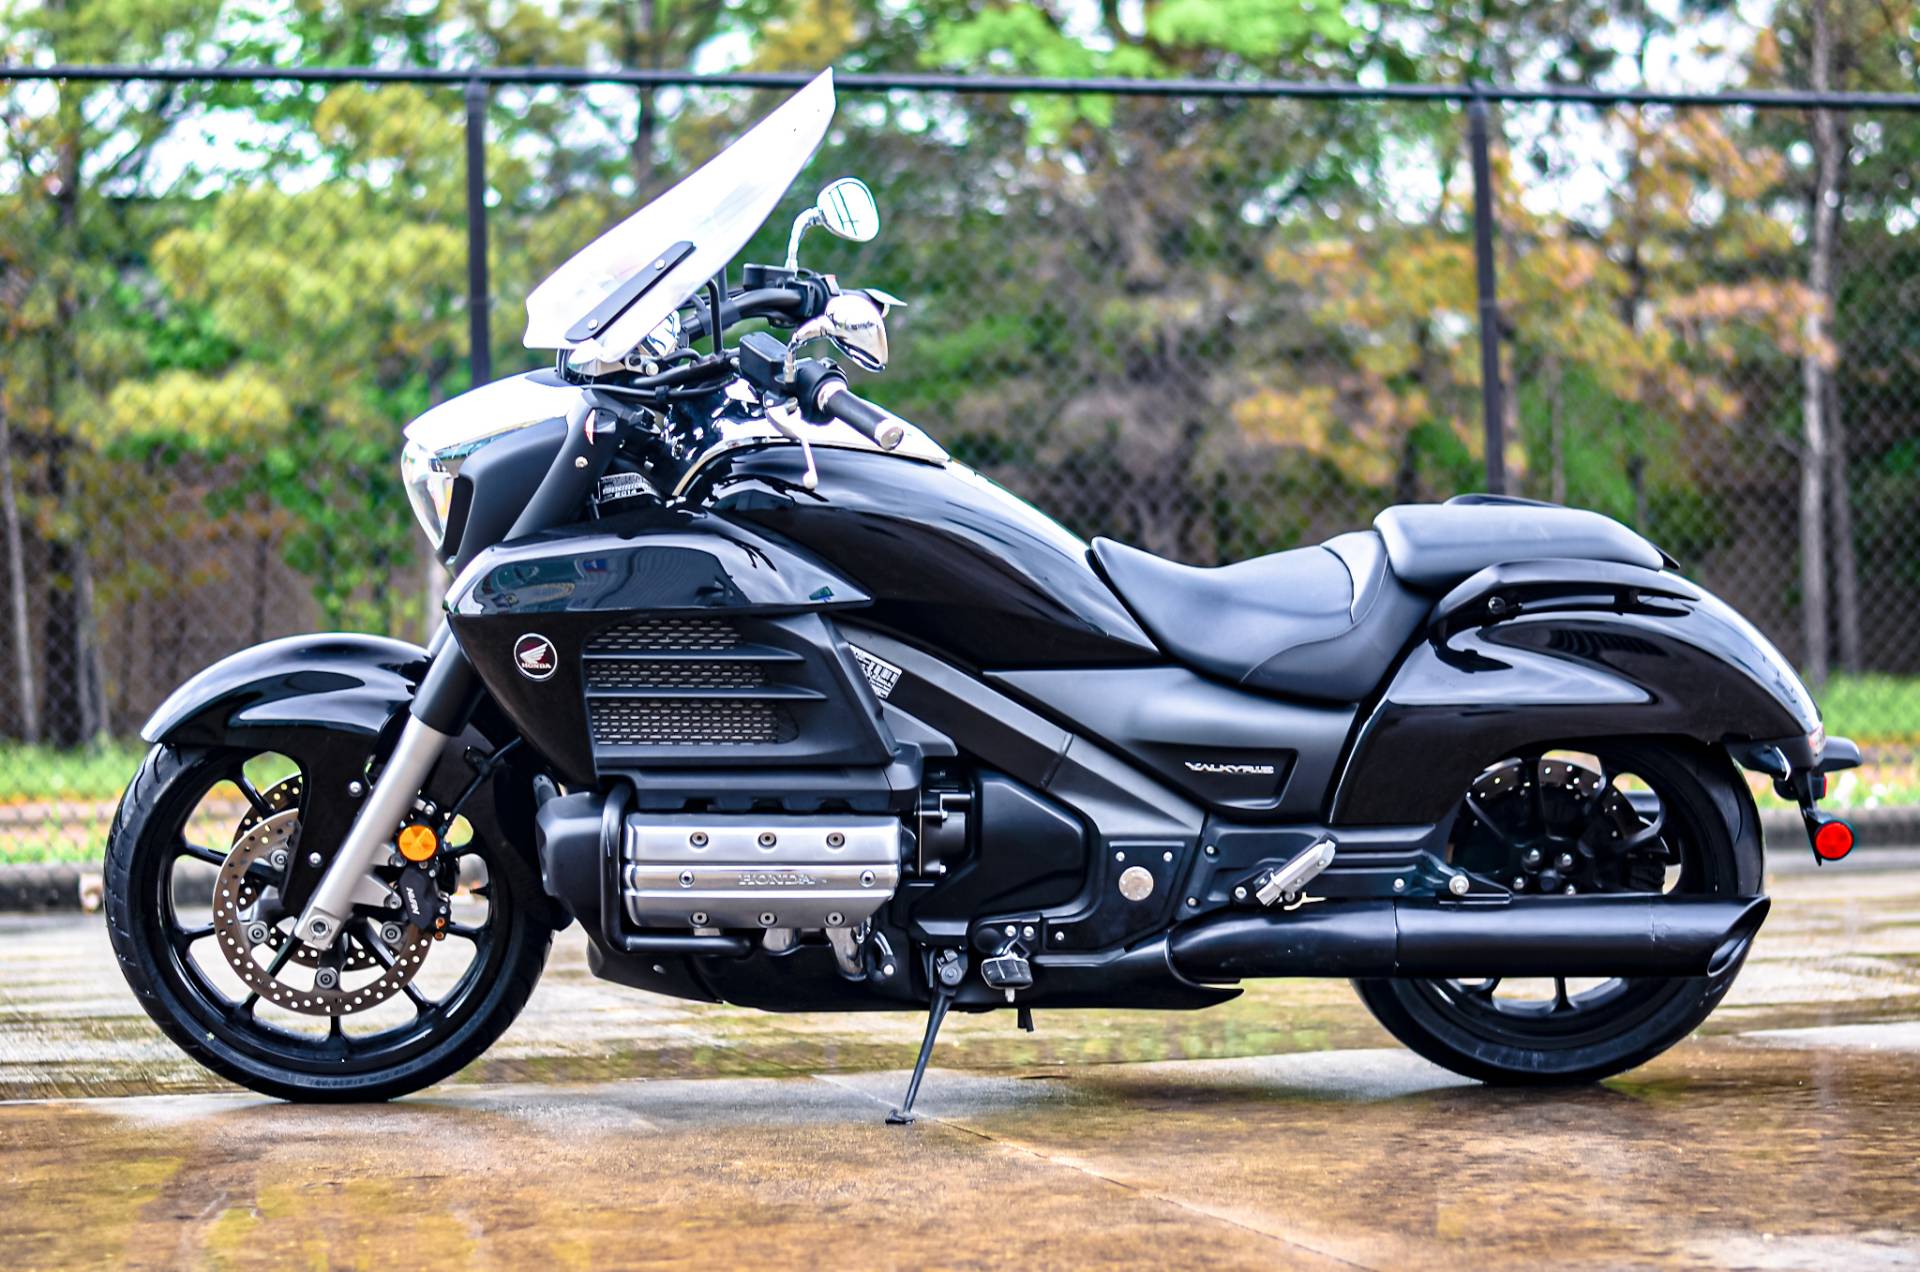 Used 2014 Honda GL1800C Valkyrie Motorcycles in Houston, TX Stock